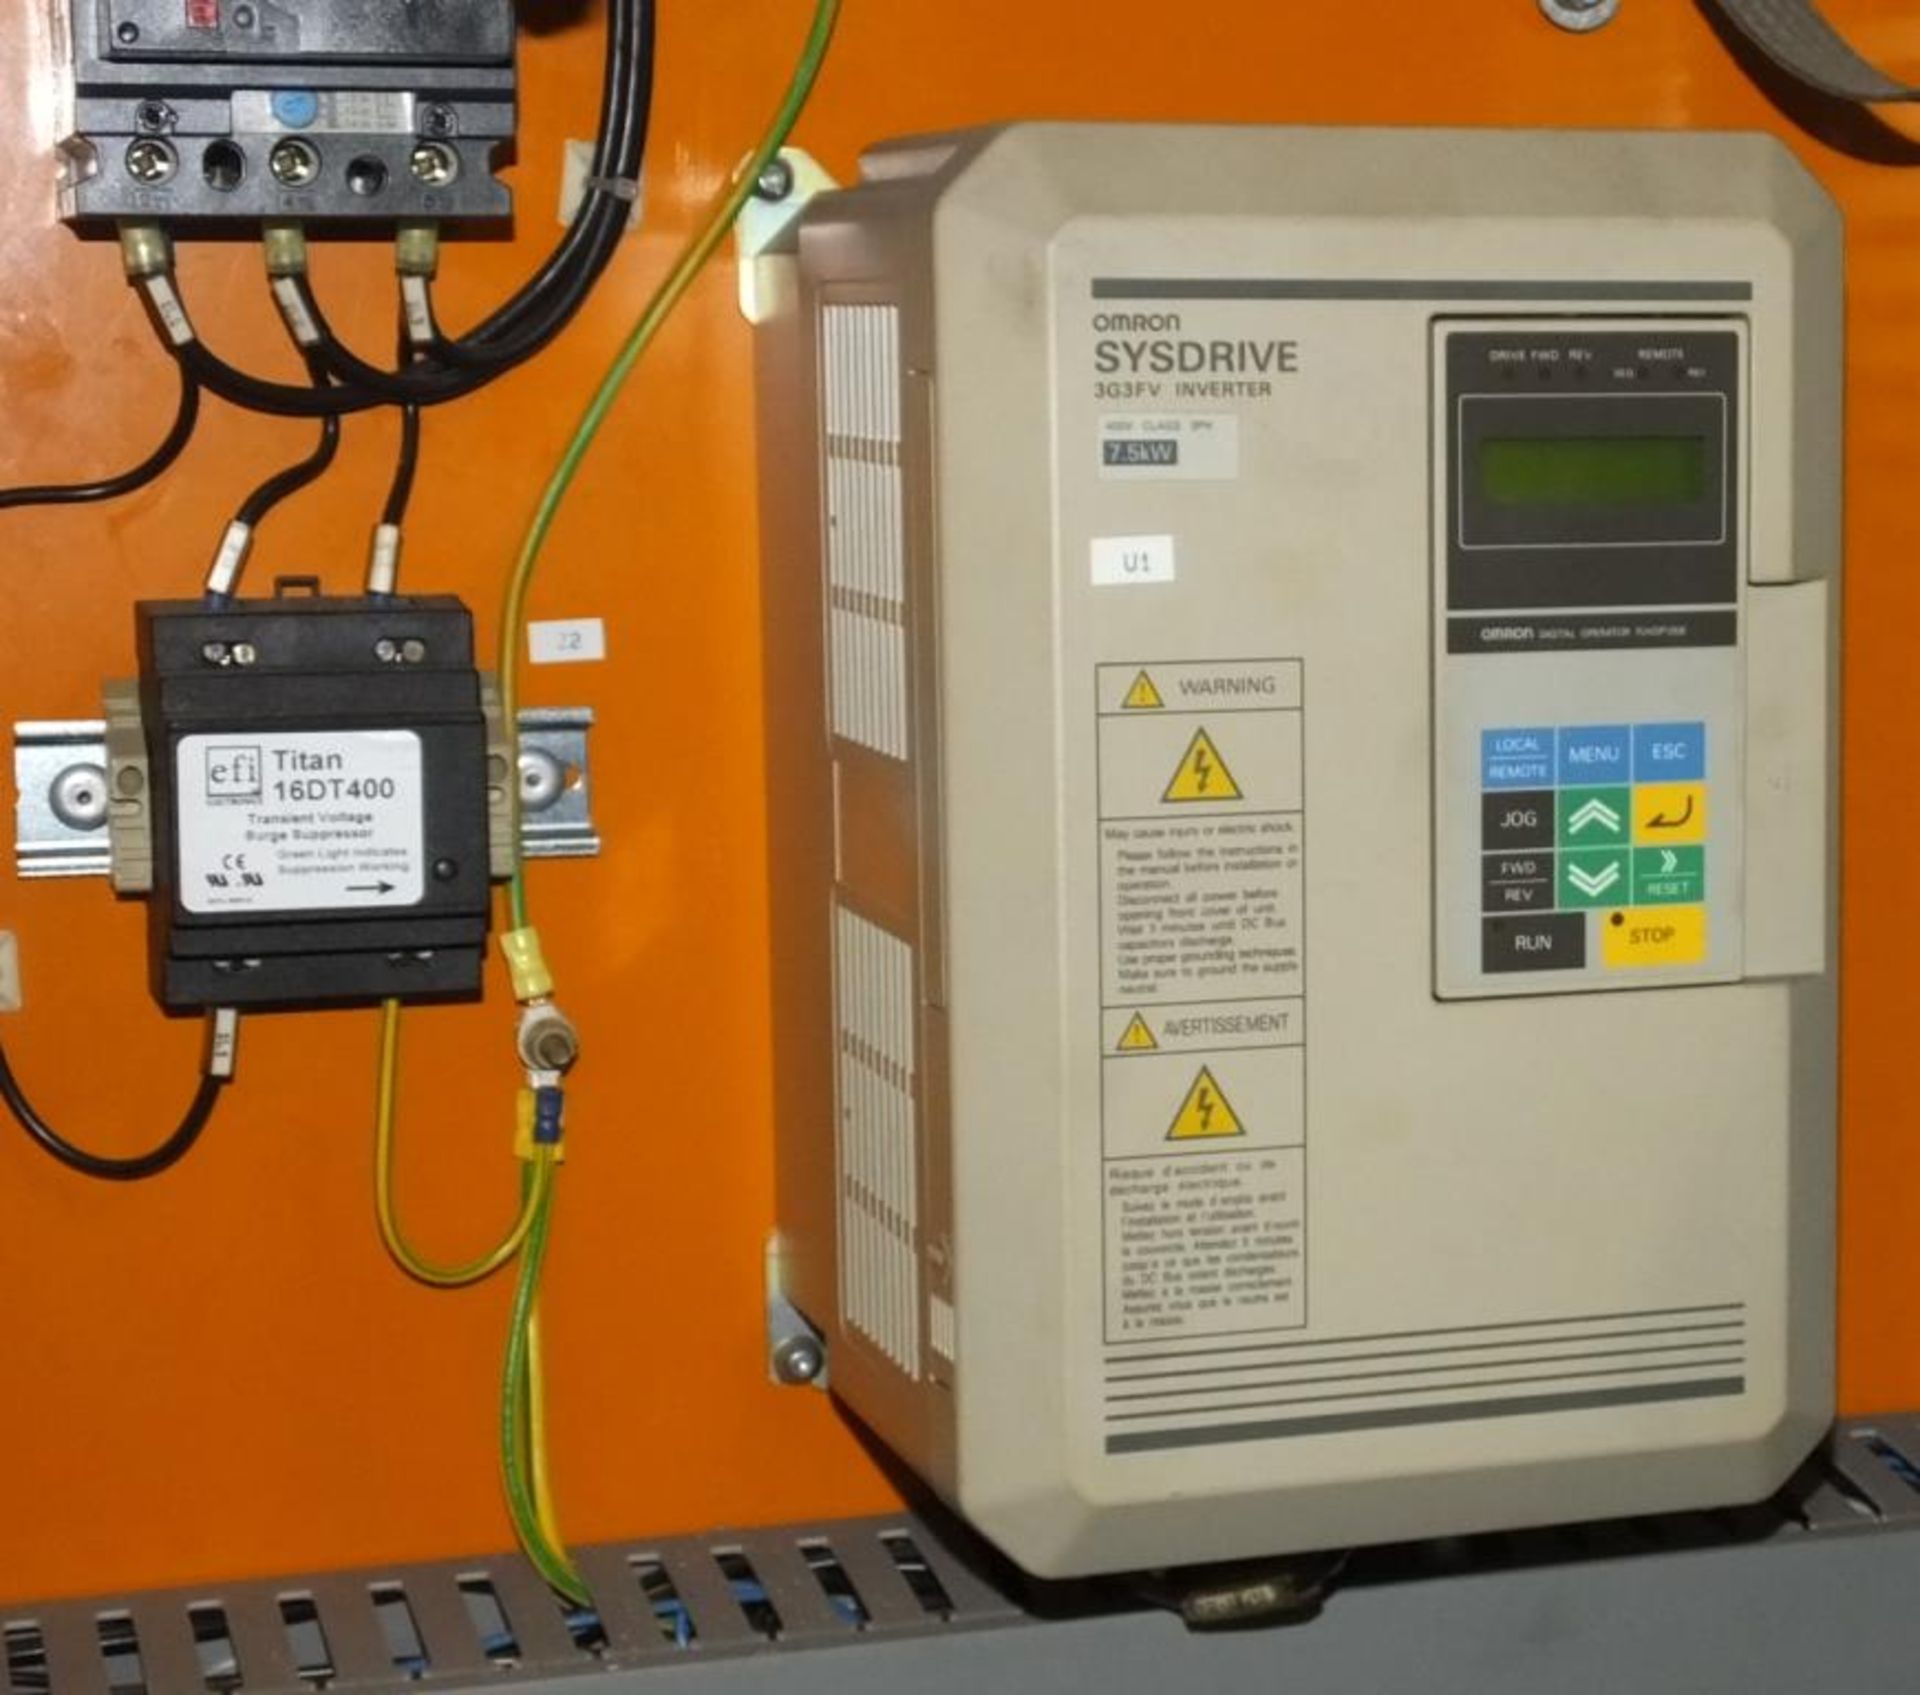 Jones & shipman Ultramat Lathe - GE Fanu Series 210i-T control panel - Image 23 of 43